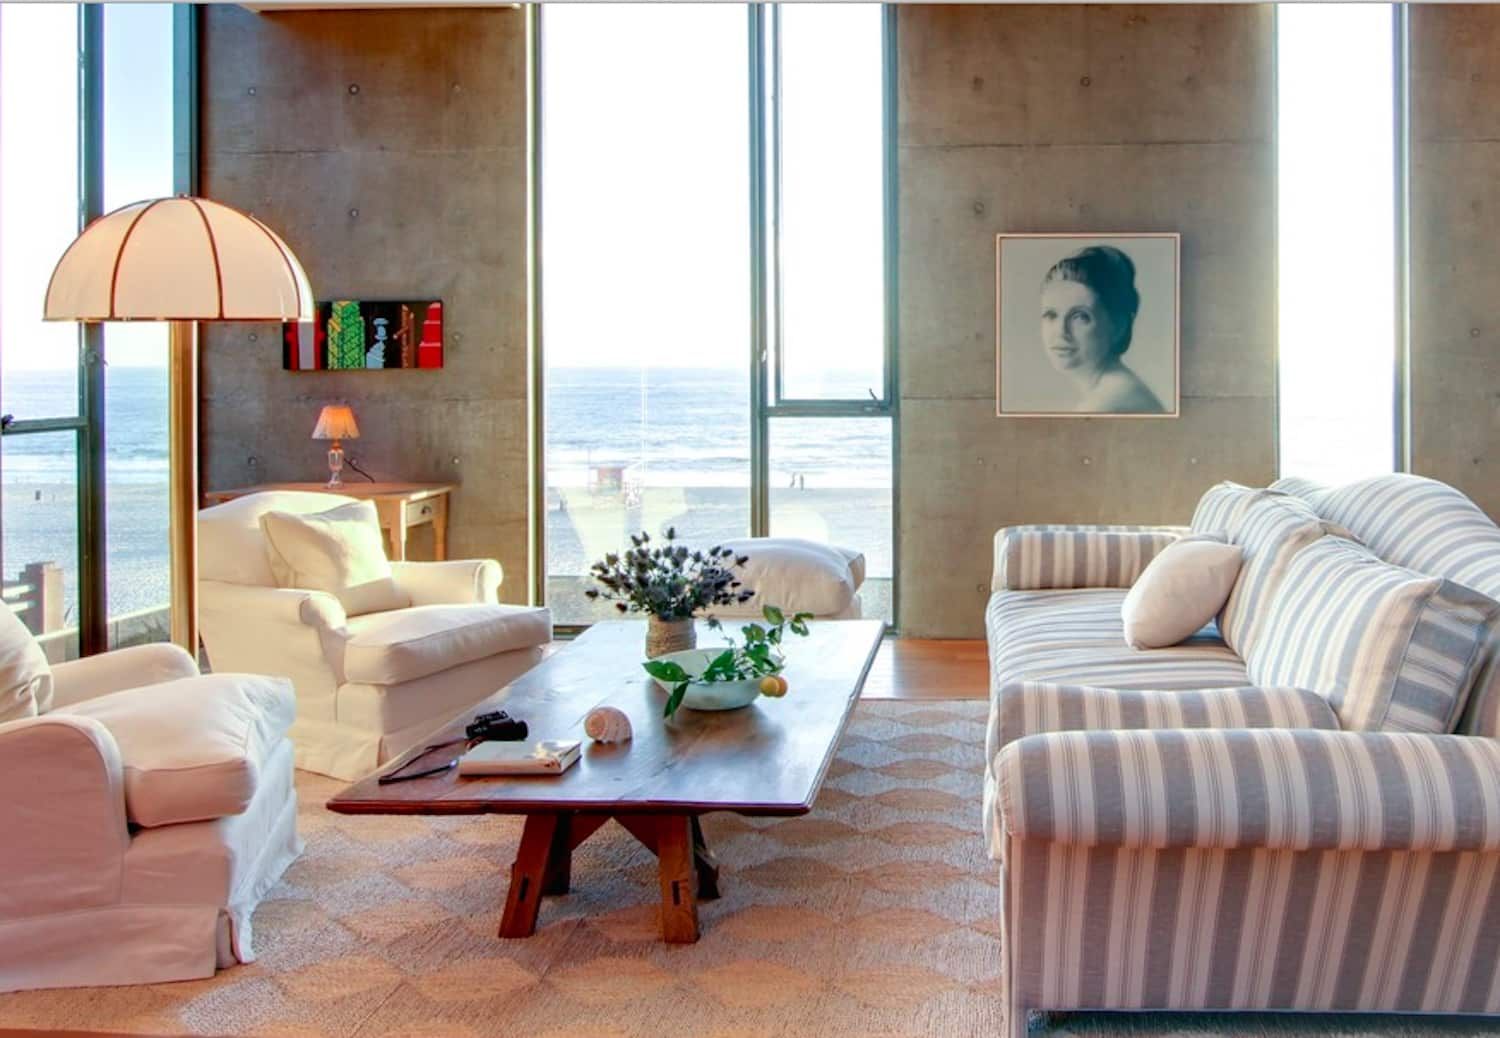 Living room in California by David Desmond